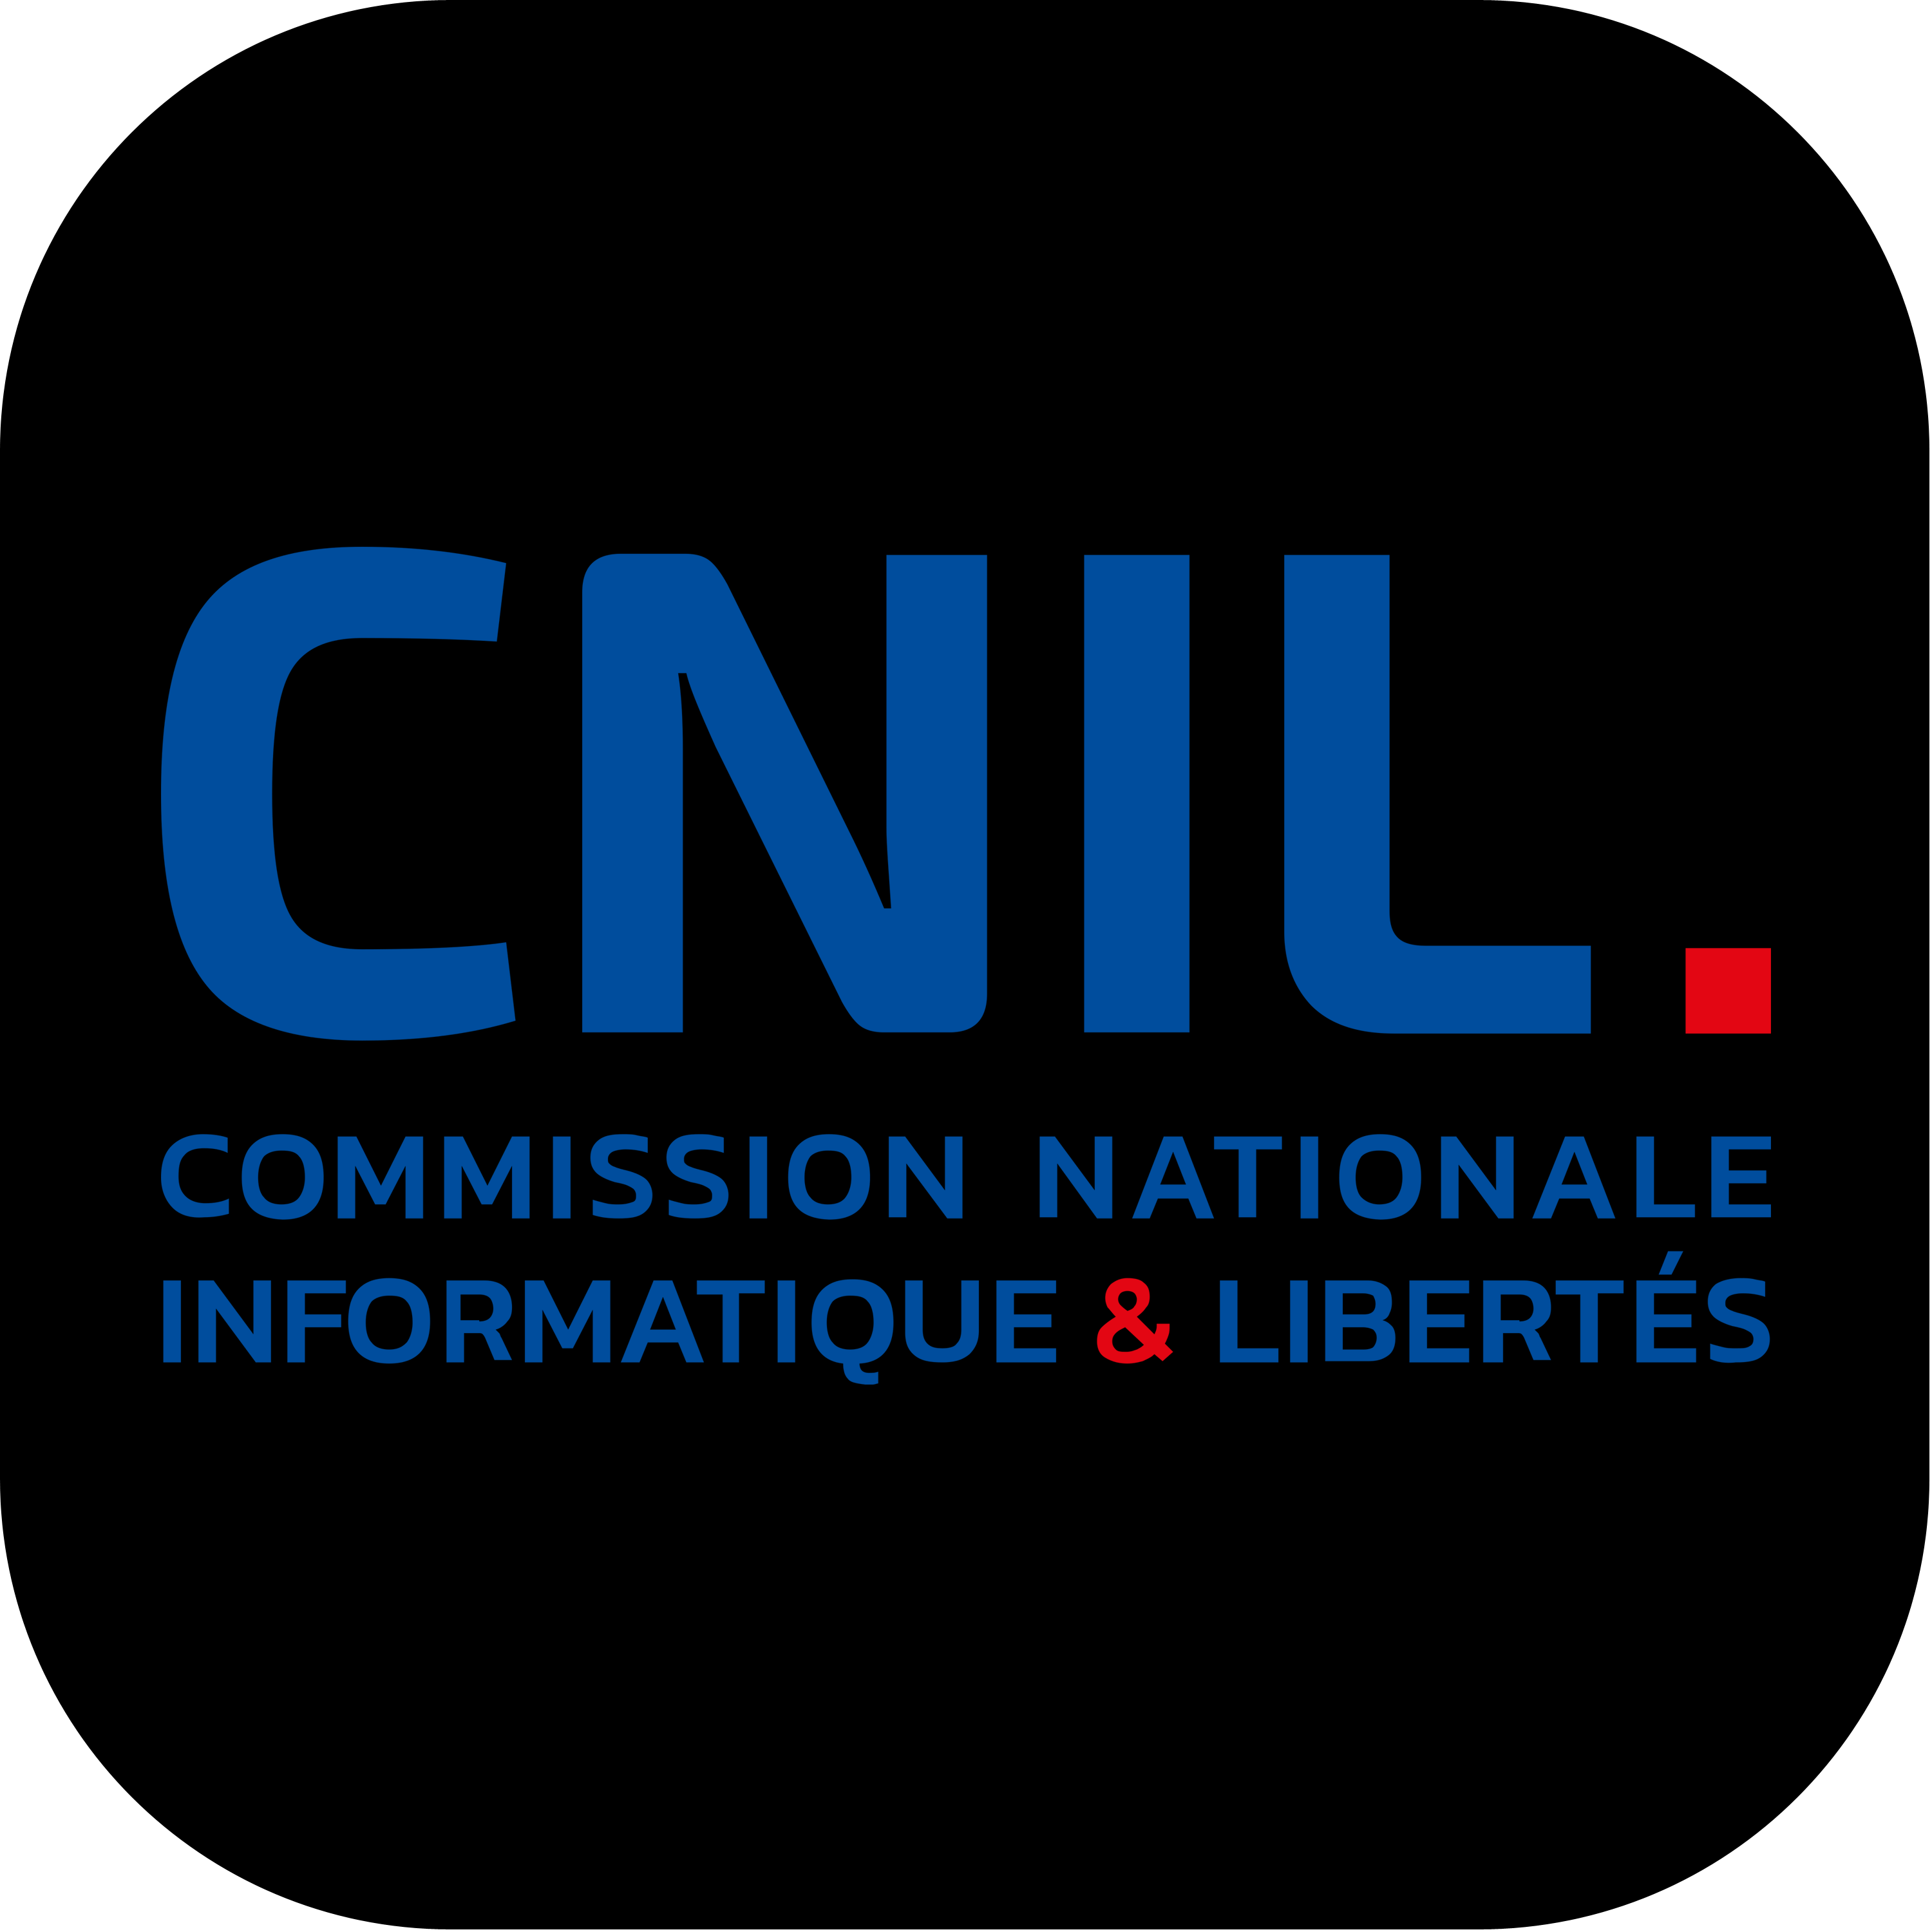 Cnil Logo 2016 Transparent Photo